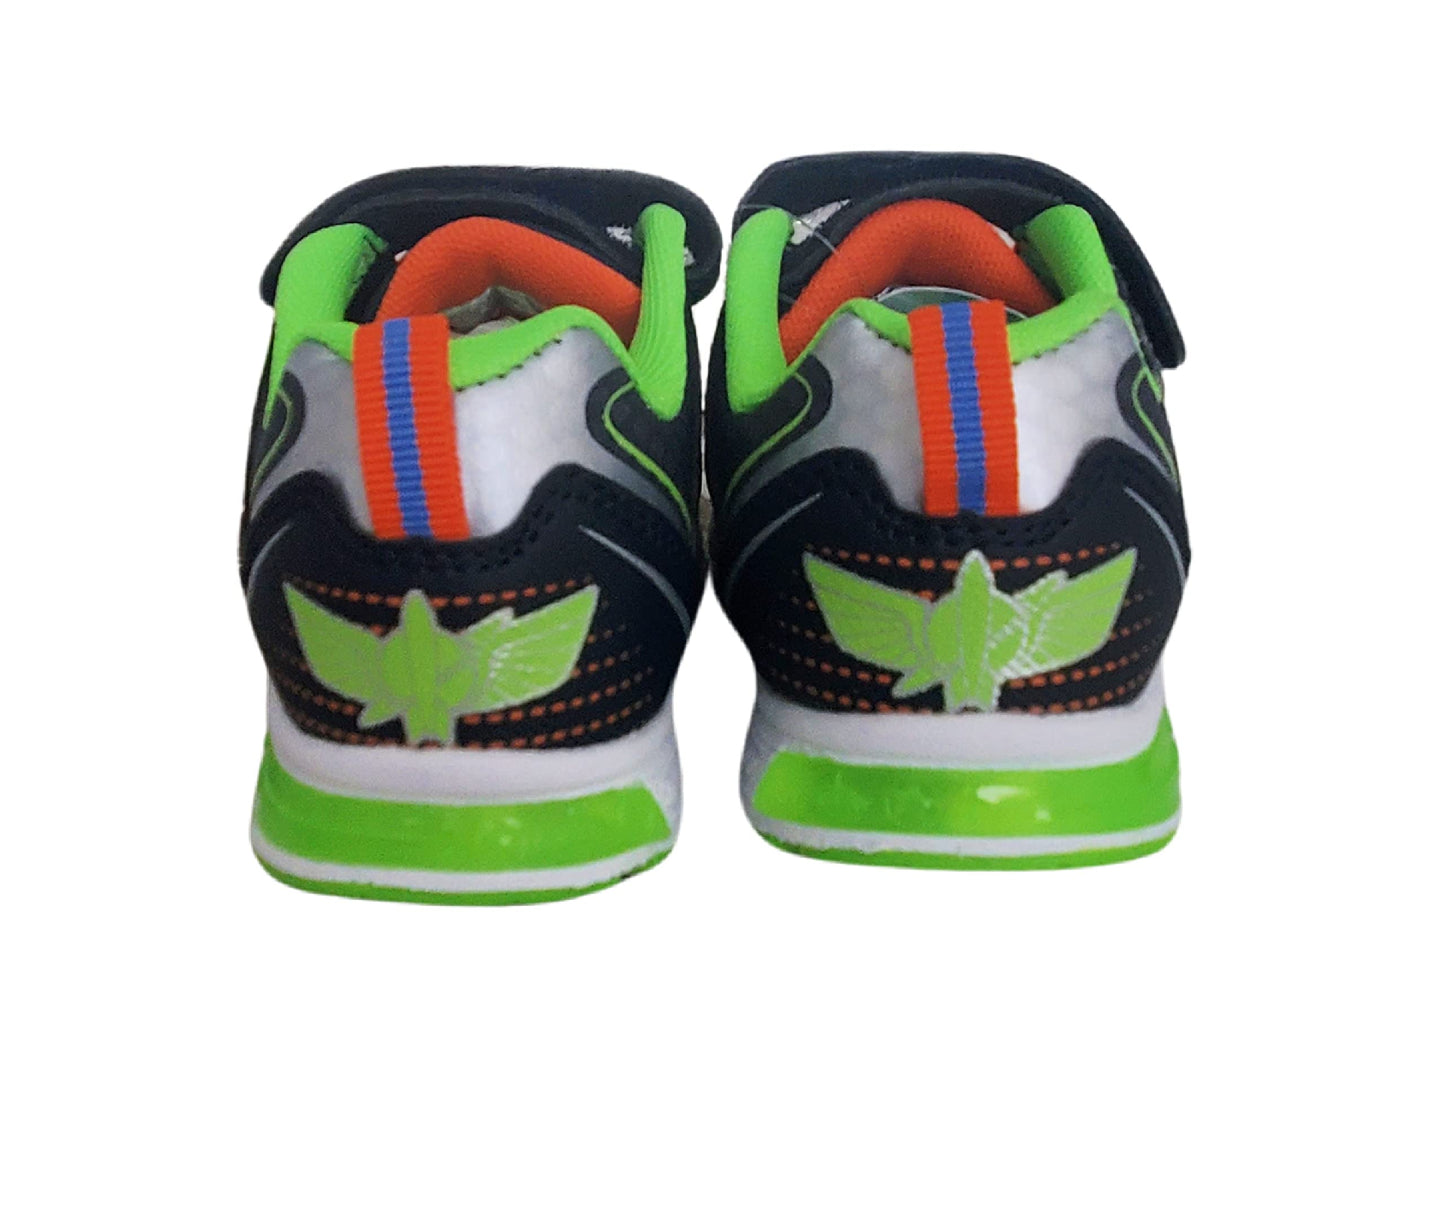 Disney Pixar Toy Story 4 Boy's Lighted Athletic Sneaker, Black/Green (Toddler/Little Kid)